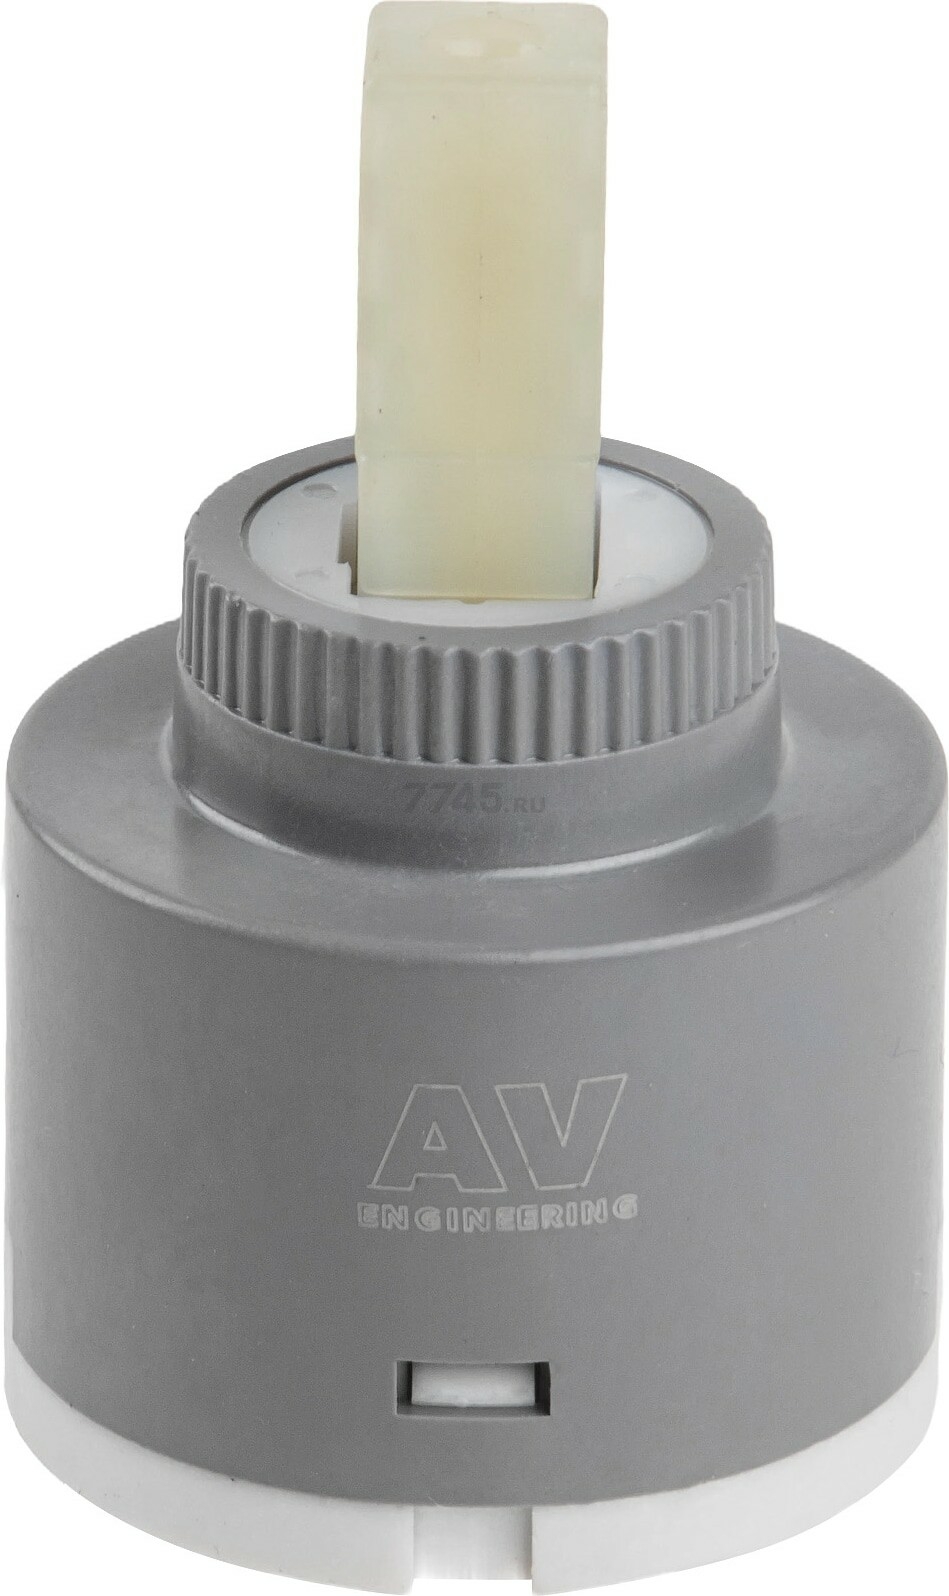 Картридж для смесителя D40 AV ENGINEERING тип A (AVSSS-086)